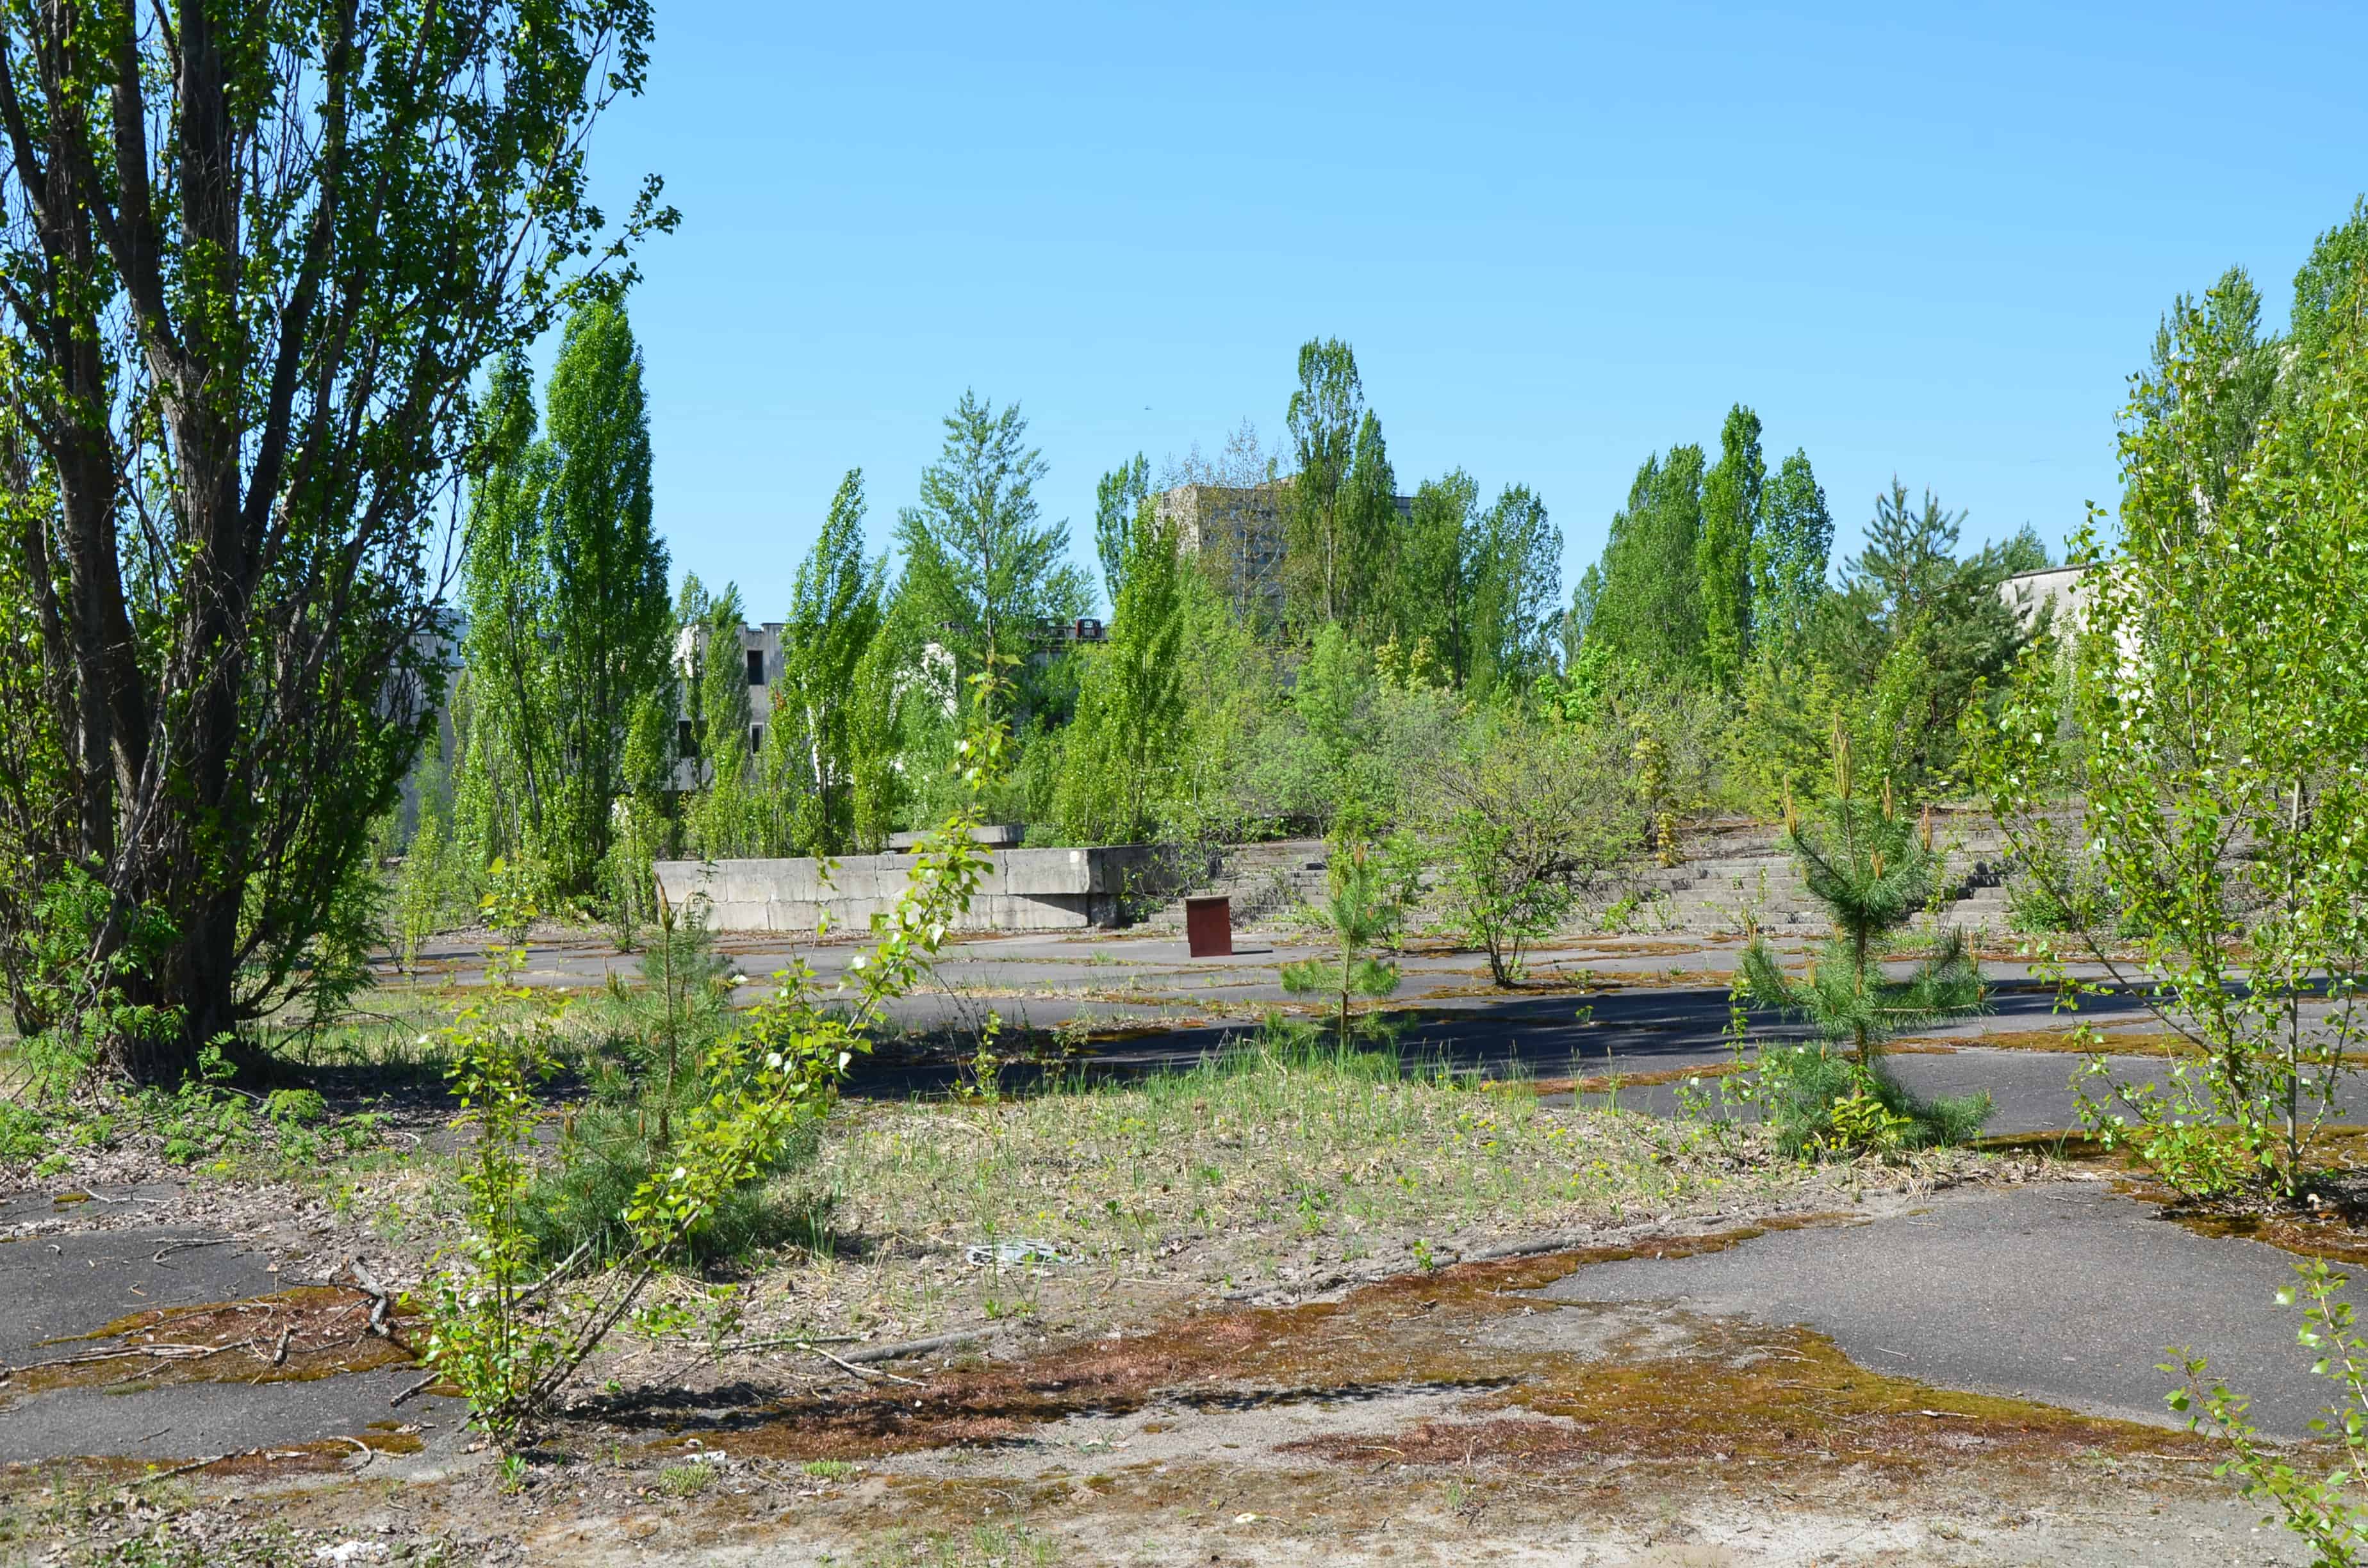 Main square in Pripyat, Chernobyl Exclusion Zone, Ukraine